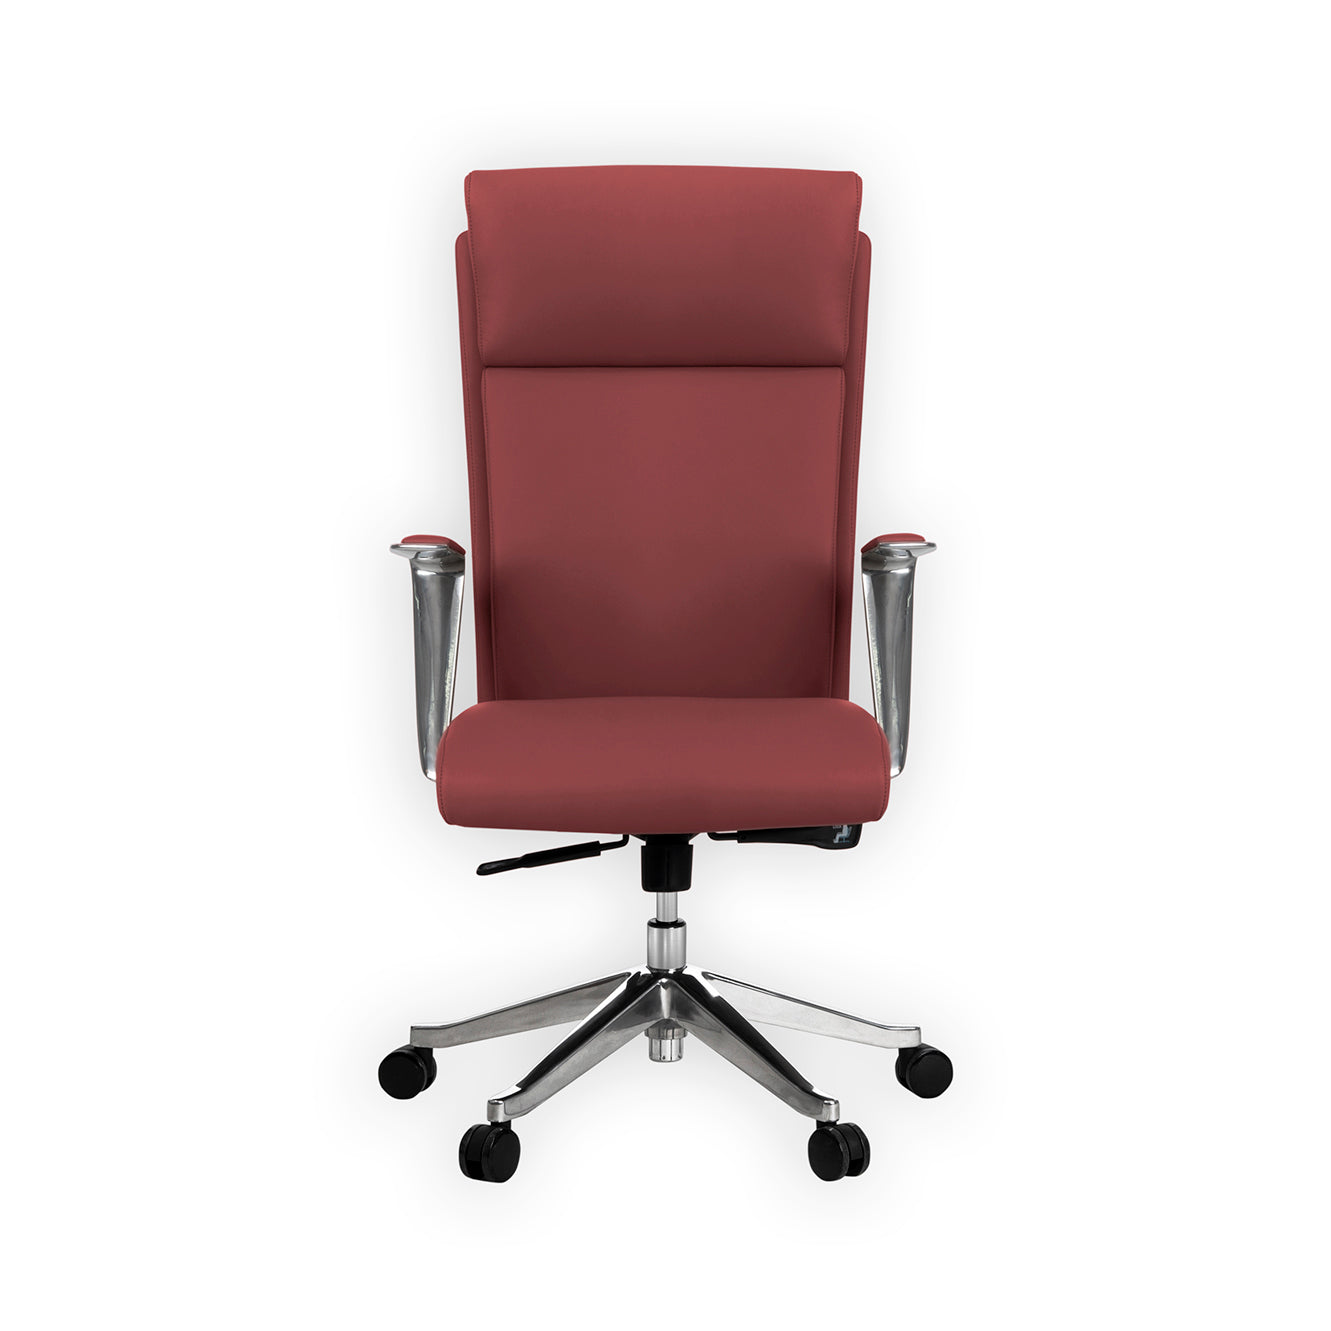 UJI Customer Chair - Red